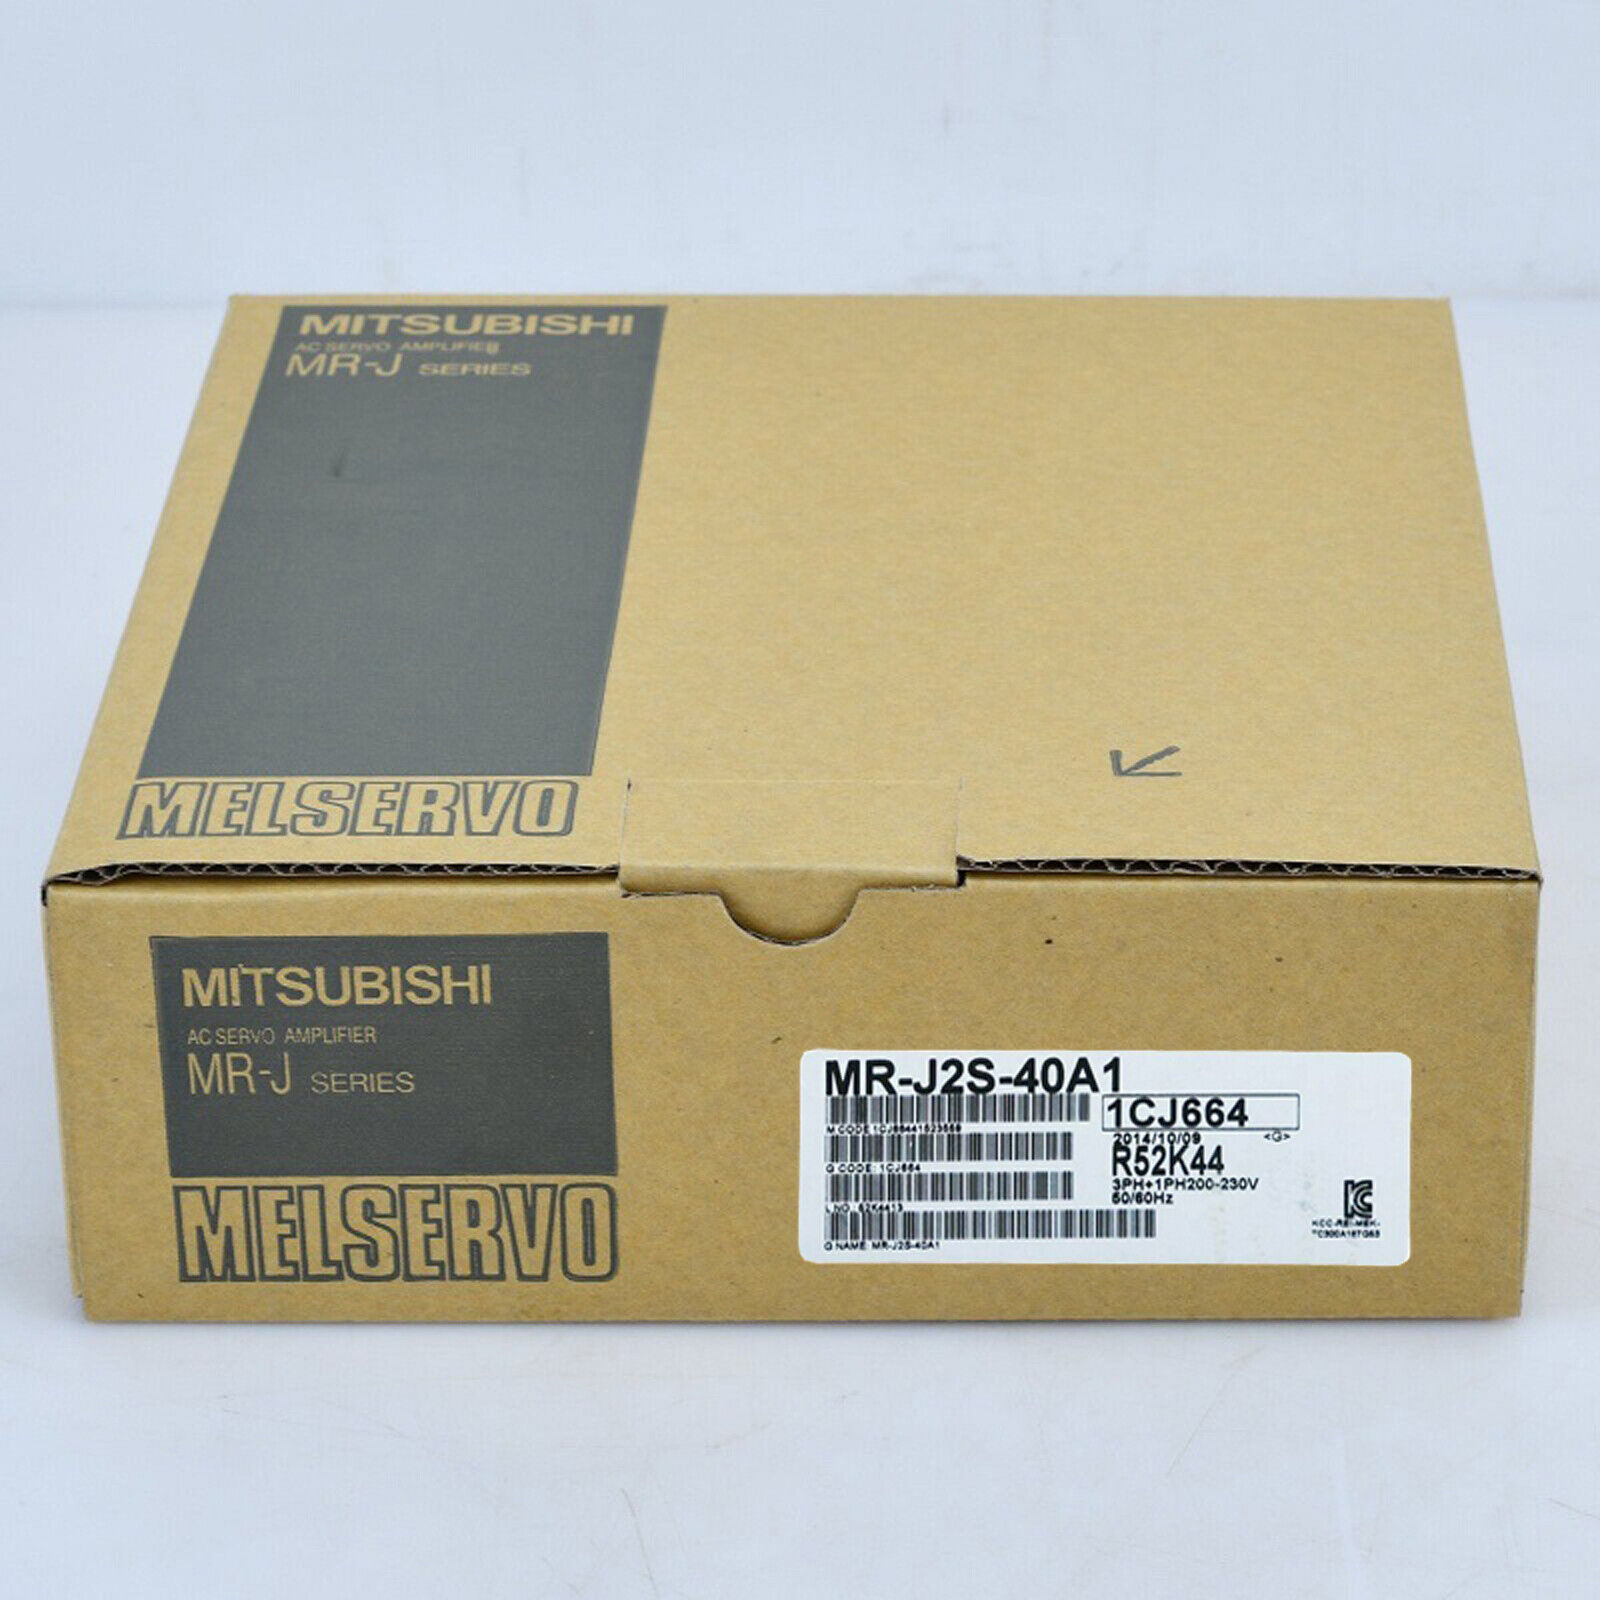 MR-J2S-40A1 400W AC Server MRJ2S40A1 Mitsubishi New in box One year warranty